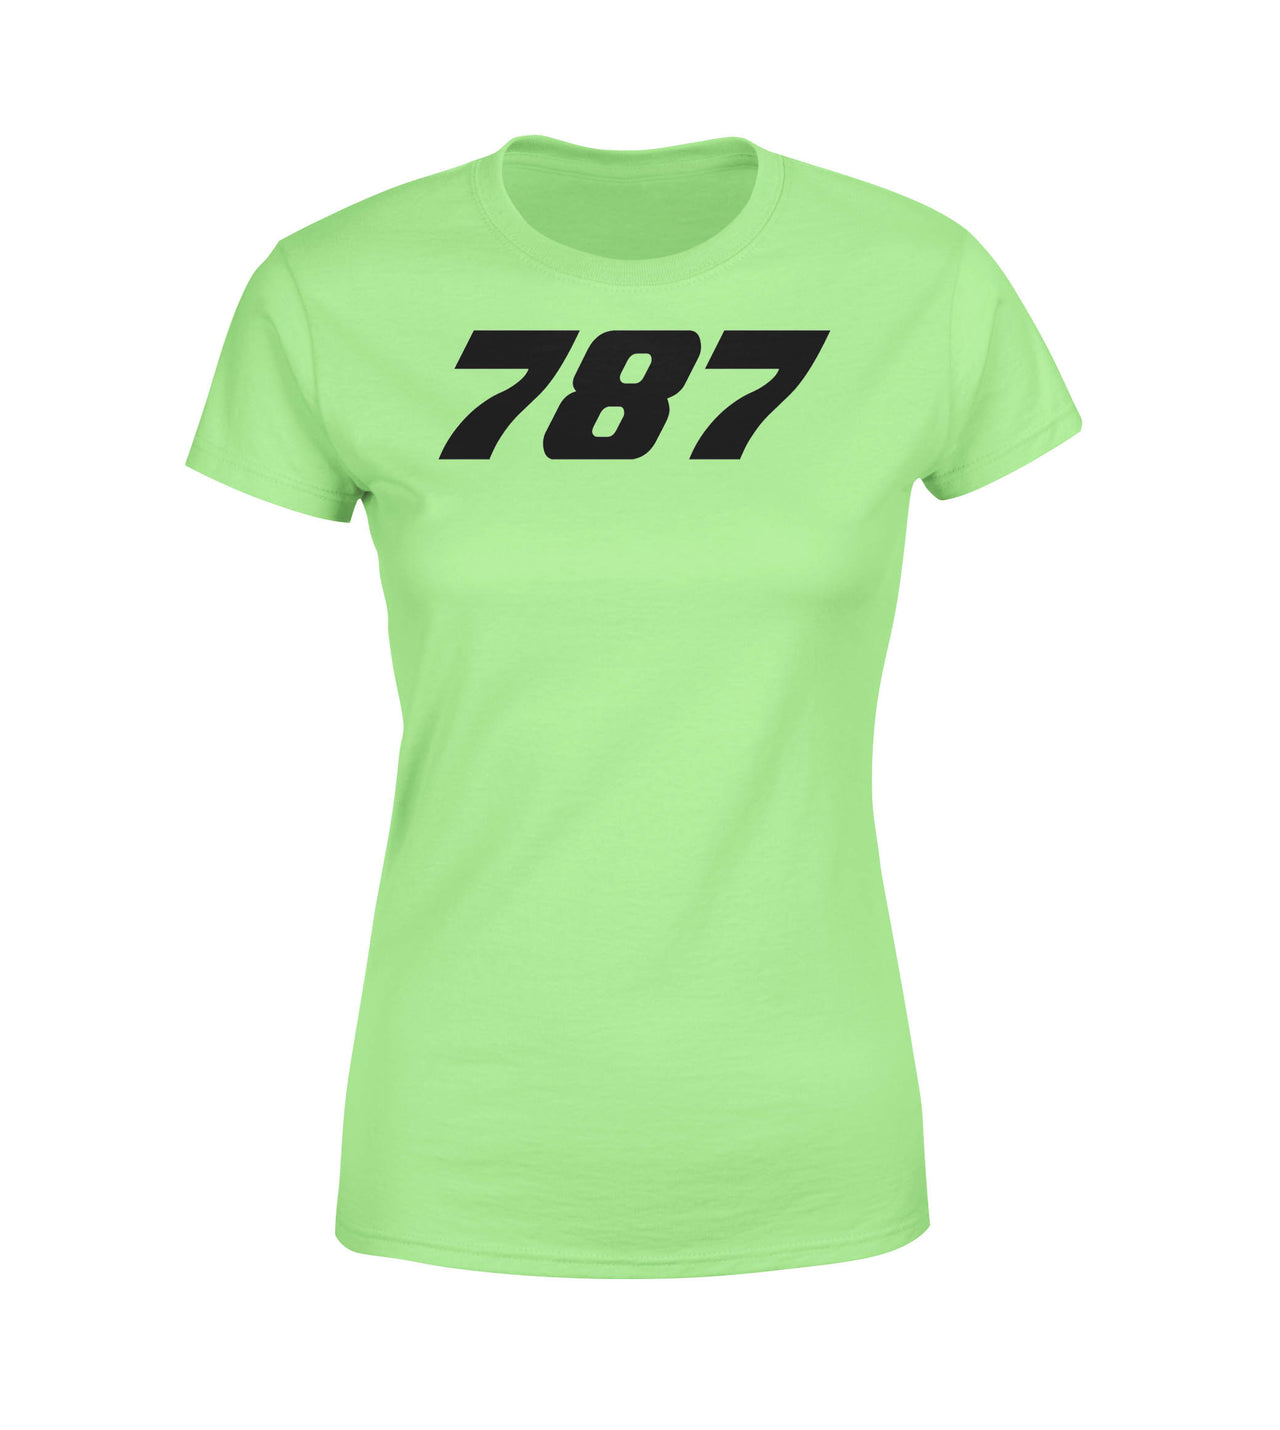 787 Flat Text Designed Women T-Shirts